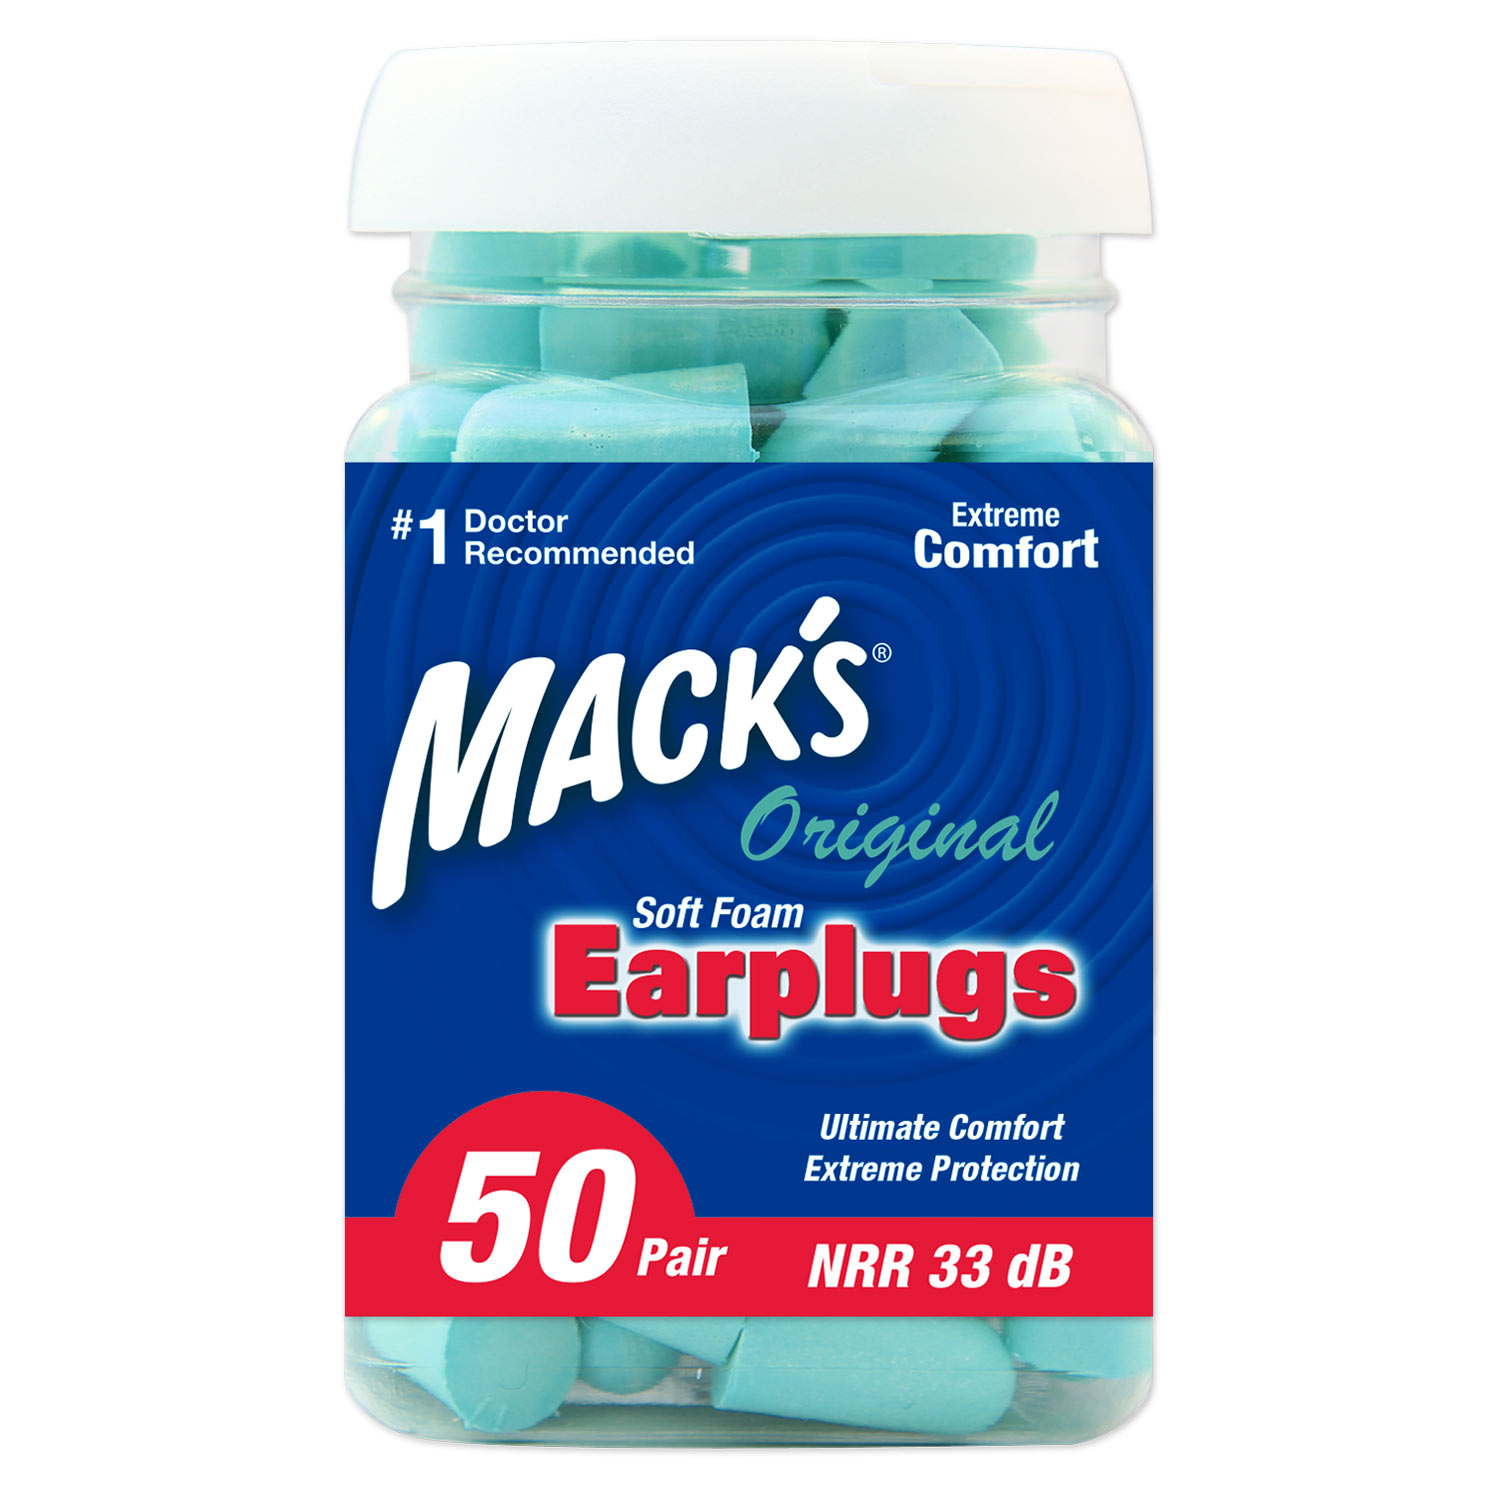 macks earplugs original soft foam ear plugs for sleep and noise reduction 50 pair in teal